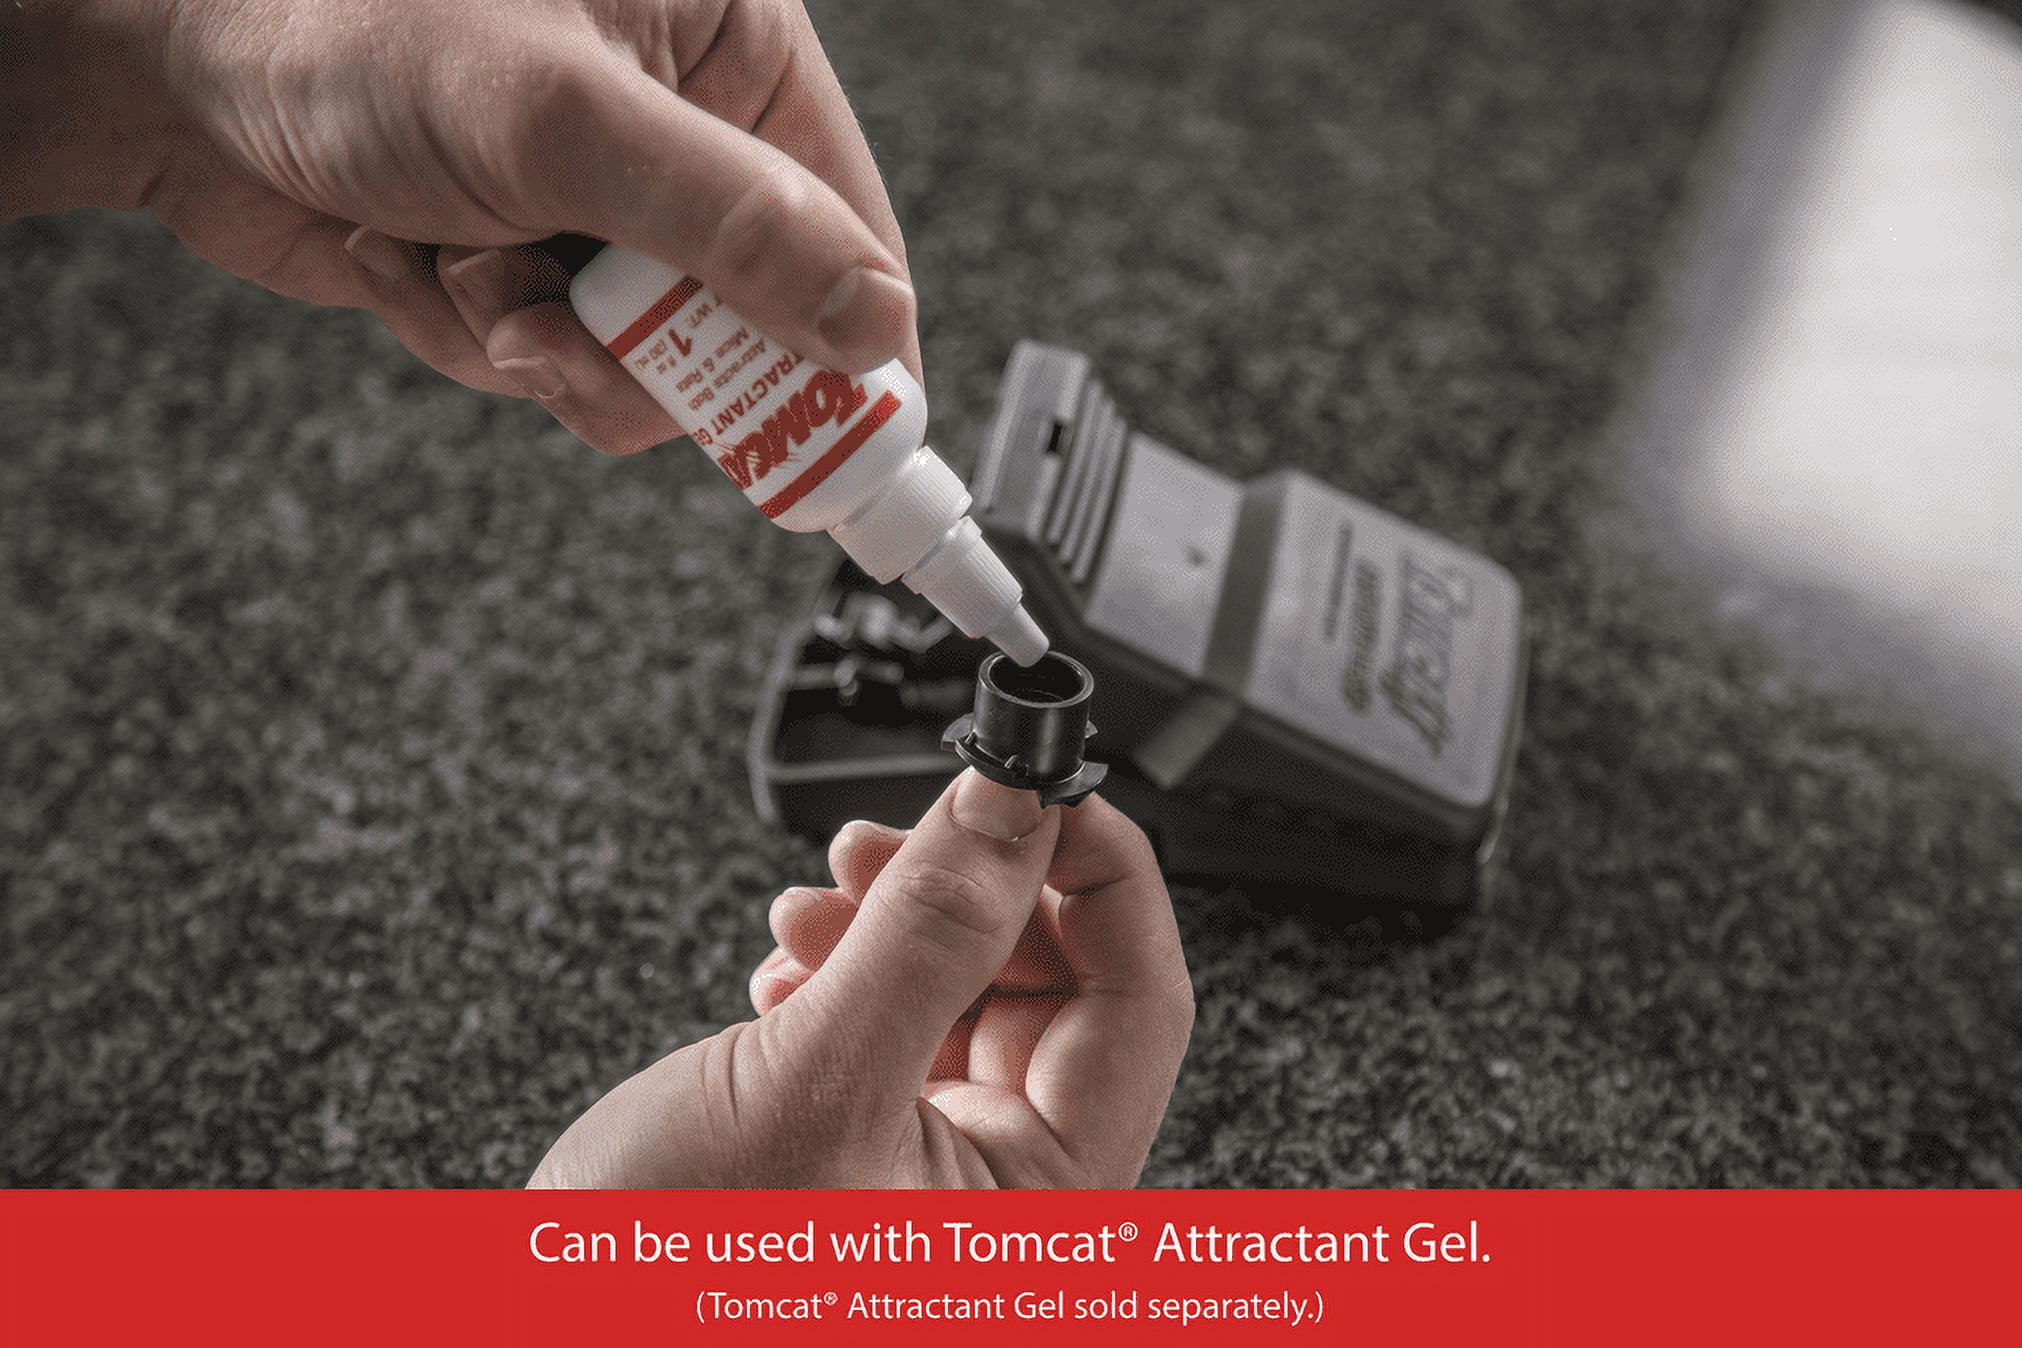 Tomcat 0361510 Mouse Snap Trap: Mouse & Rat Traps Assorted (888603036158-1)